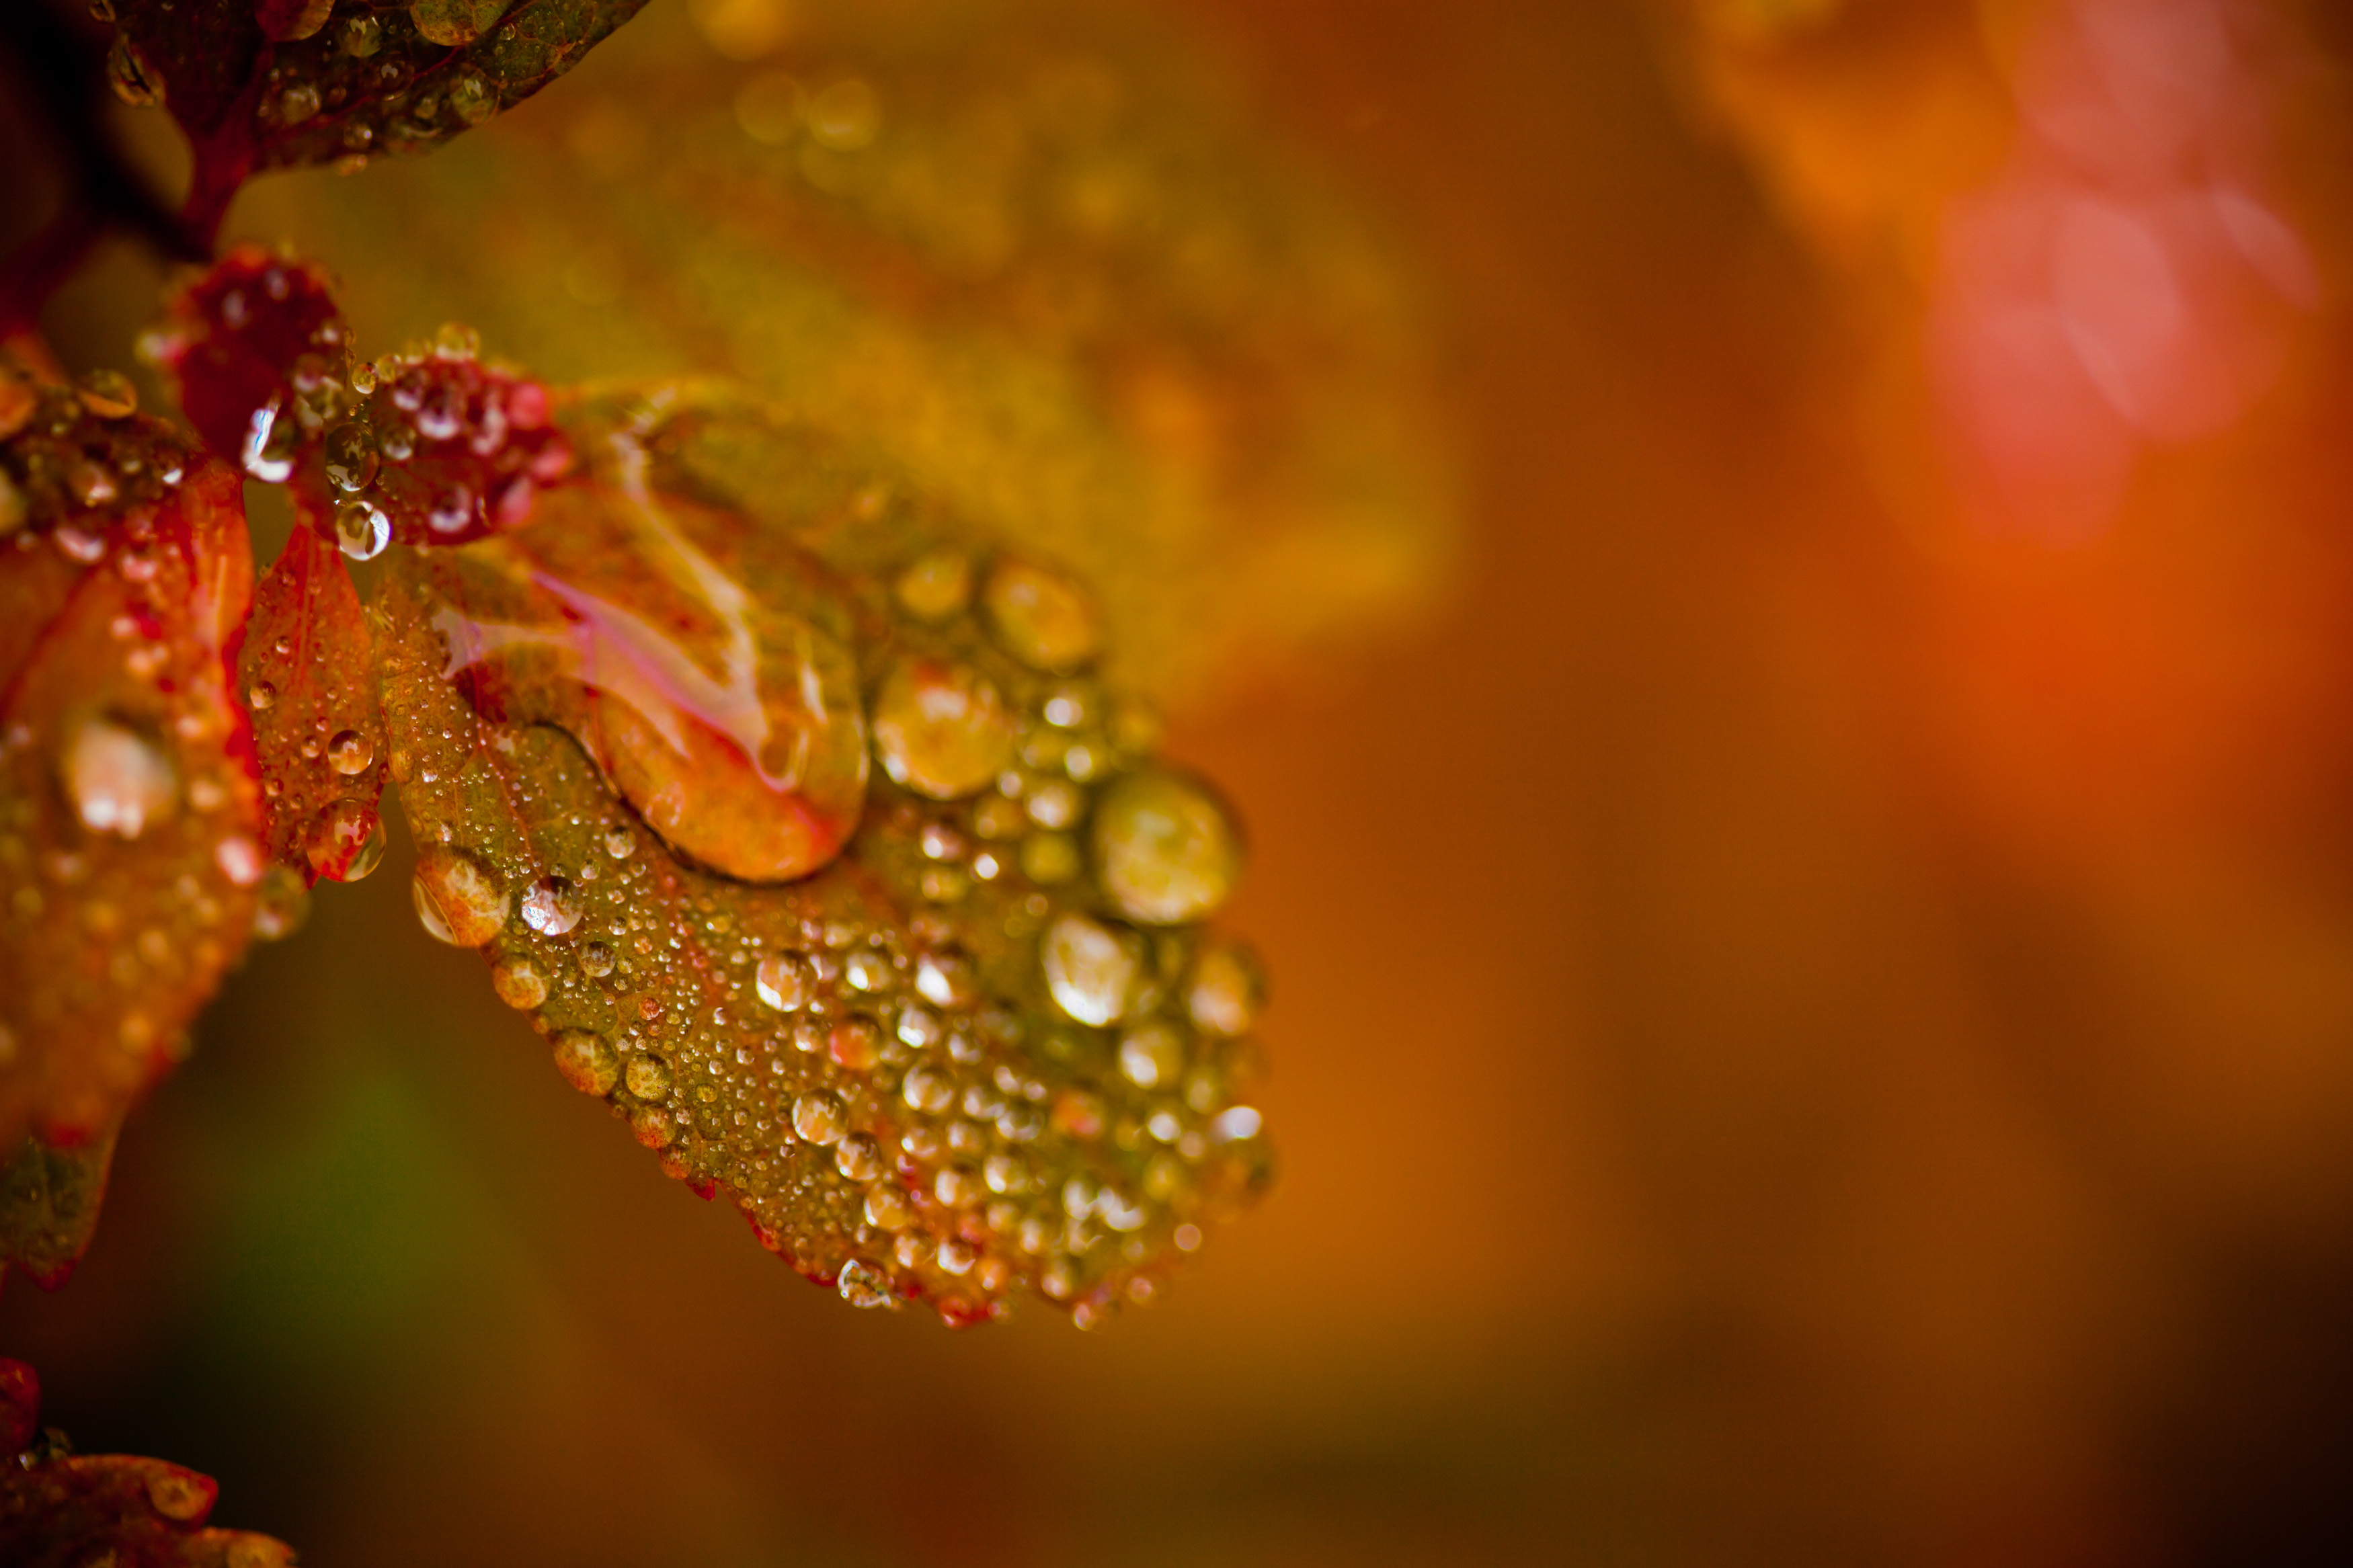 Droplets on Autumn Foliage